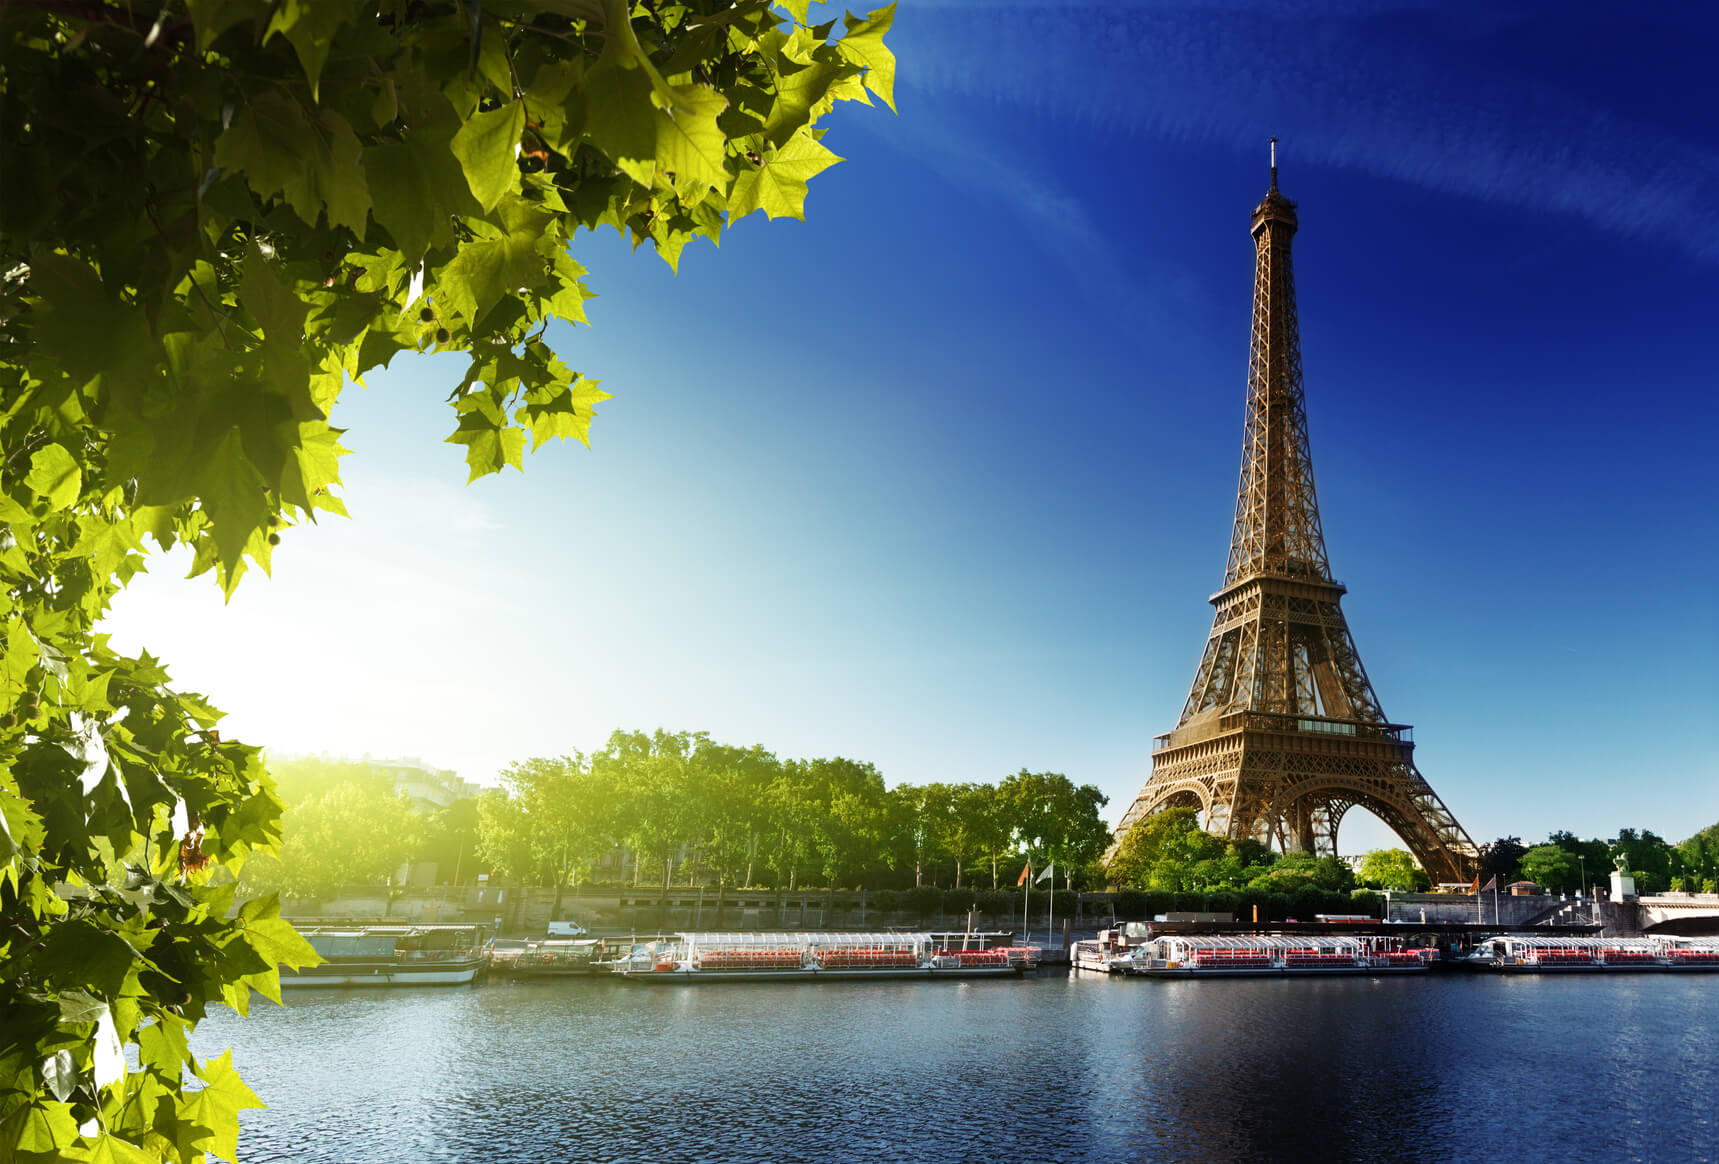 Flight deals from Boston to Paris, France | Secret Flying